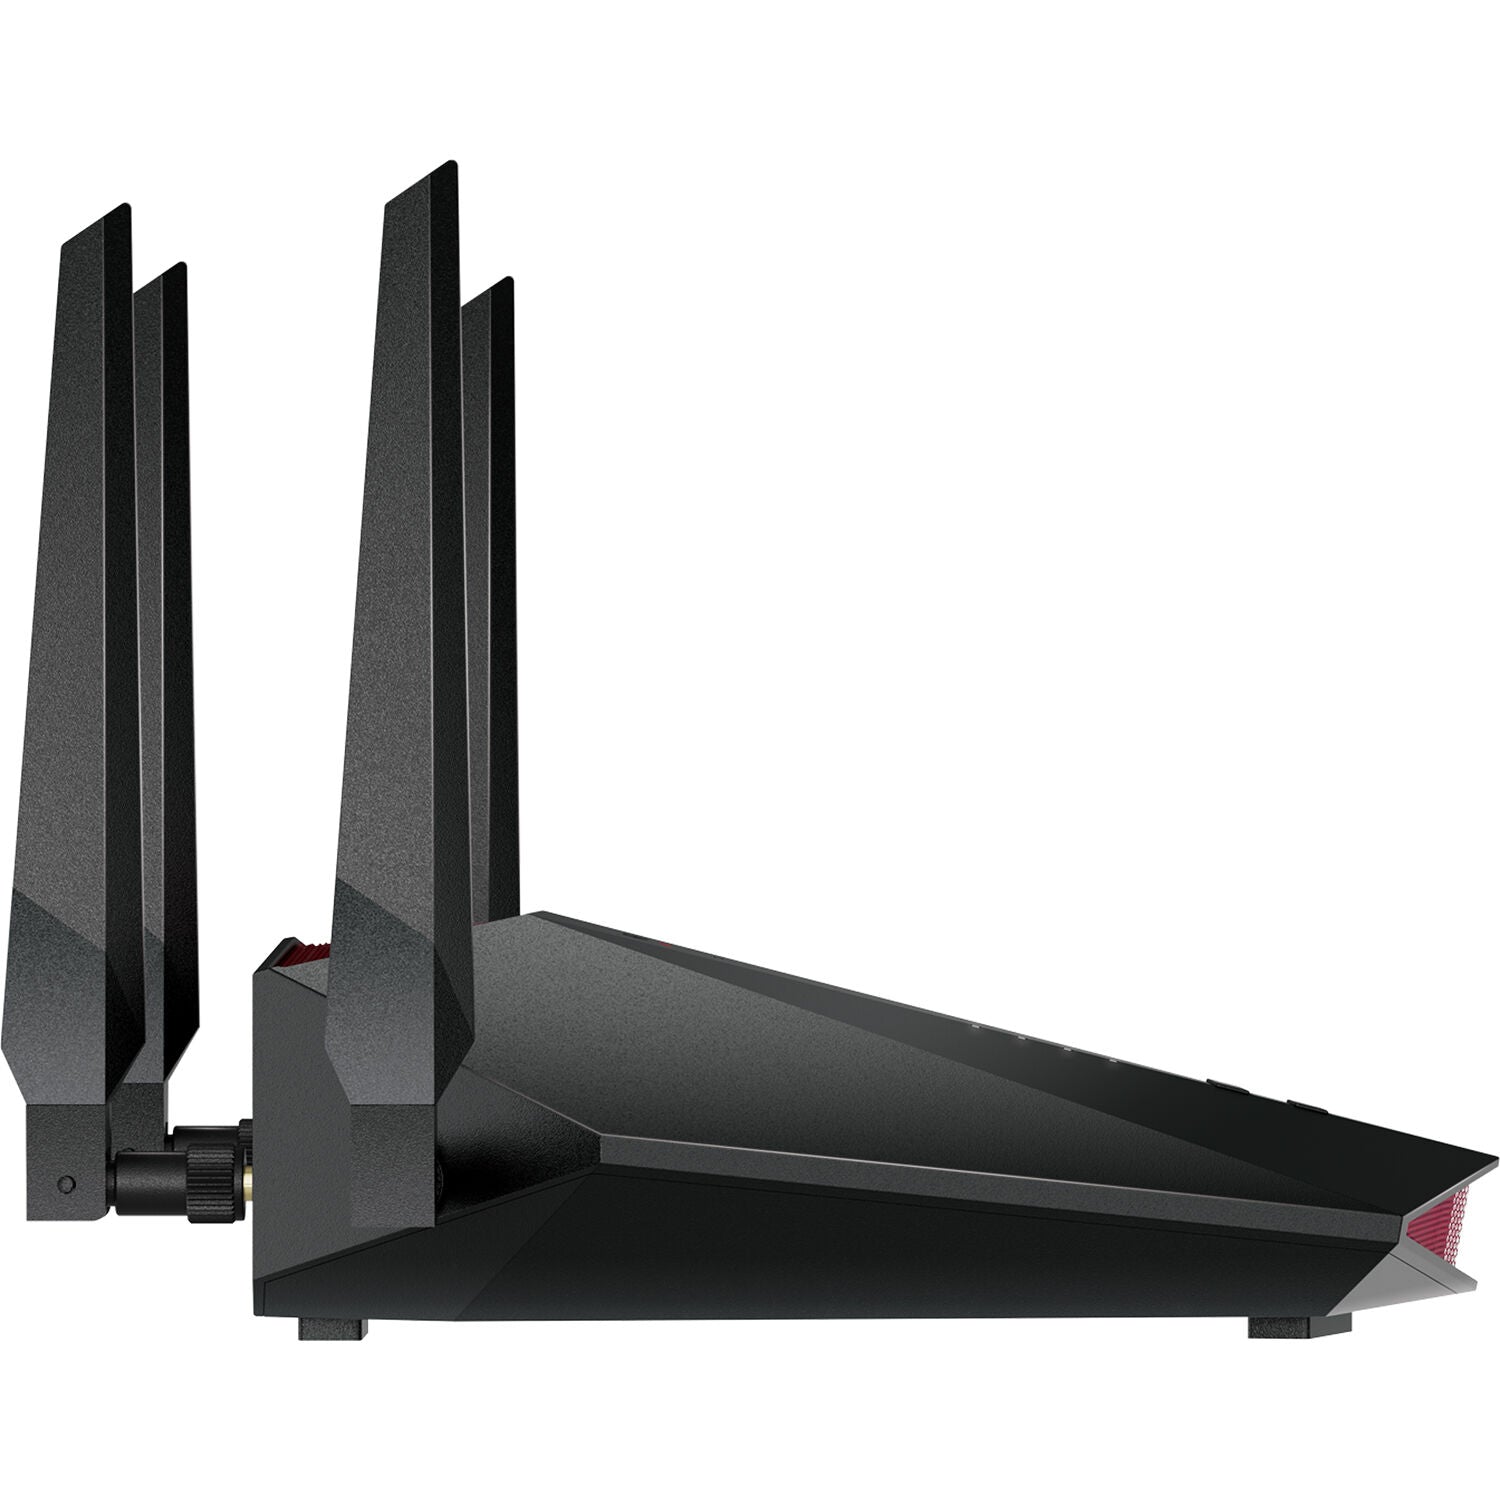 NETGEAR XR1000-100NAR Nighthawk AX5400 5.4Gbps 6-Stream Pro Gaming WiFi 6 Router - Certified Refurbished